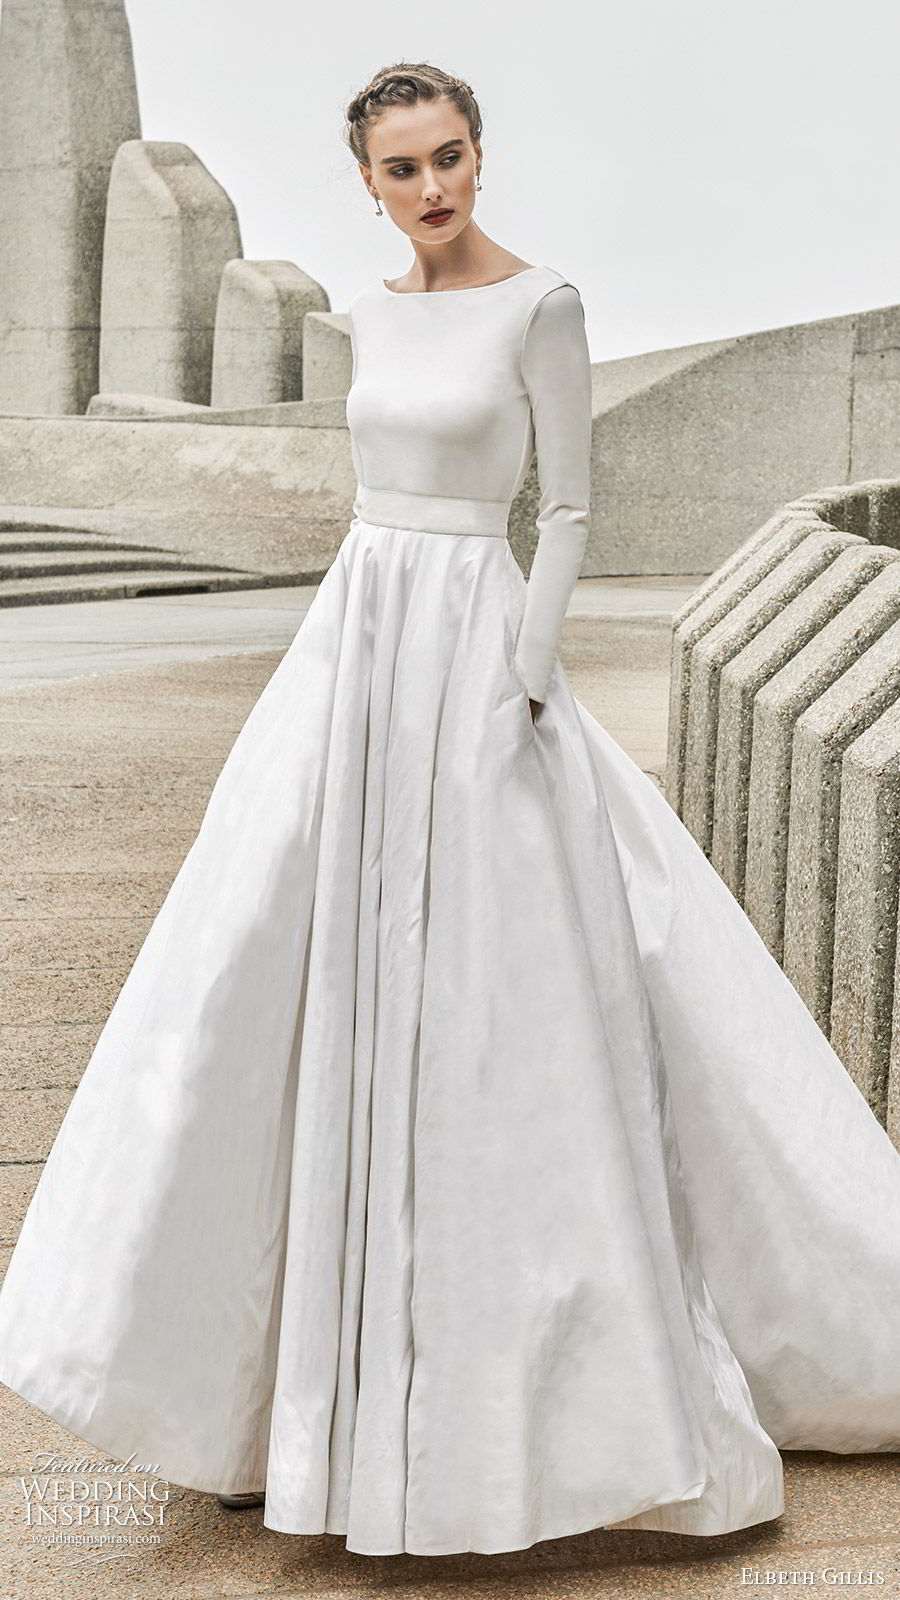 elbeth gillis 2020 bridal long sleeves bateau neckline minimally embellished a line ball gown wedding dress (2) clean chic minimal modest sweep train scoop back mv